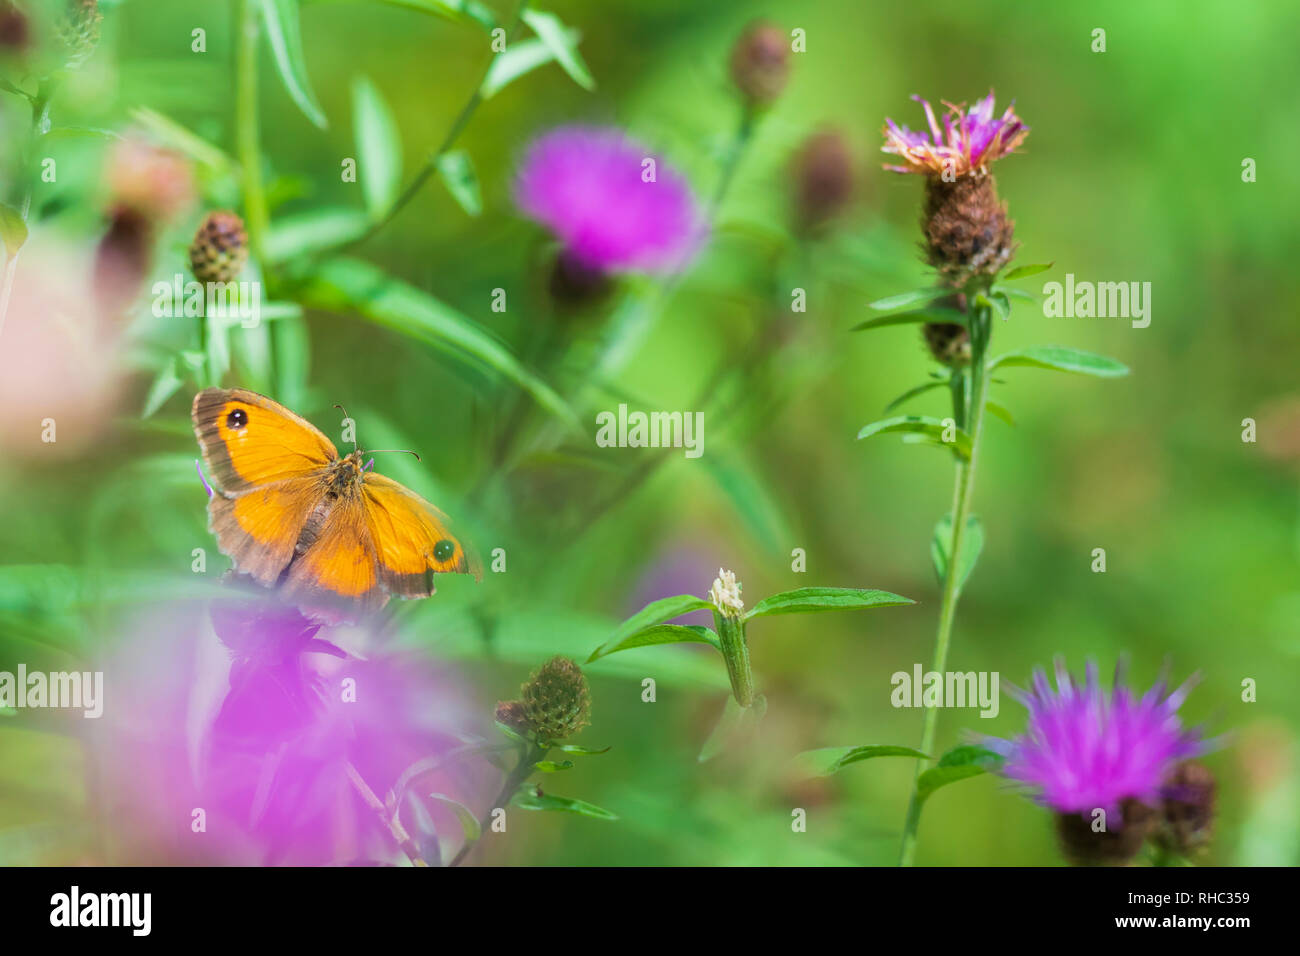 The gatekeeper butterfly, Pyronia tithonus, feeding. Dreamlike setting with small focus depth Stock Photo